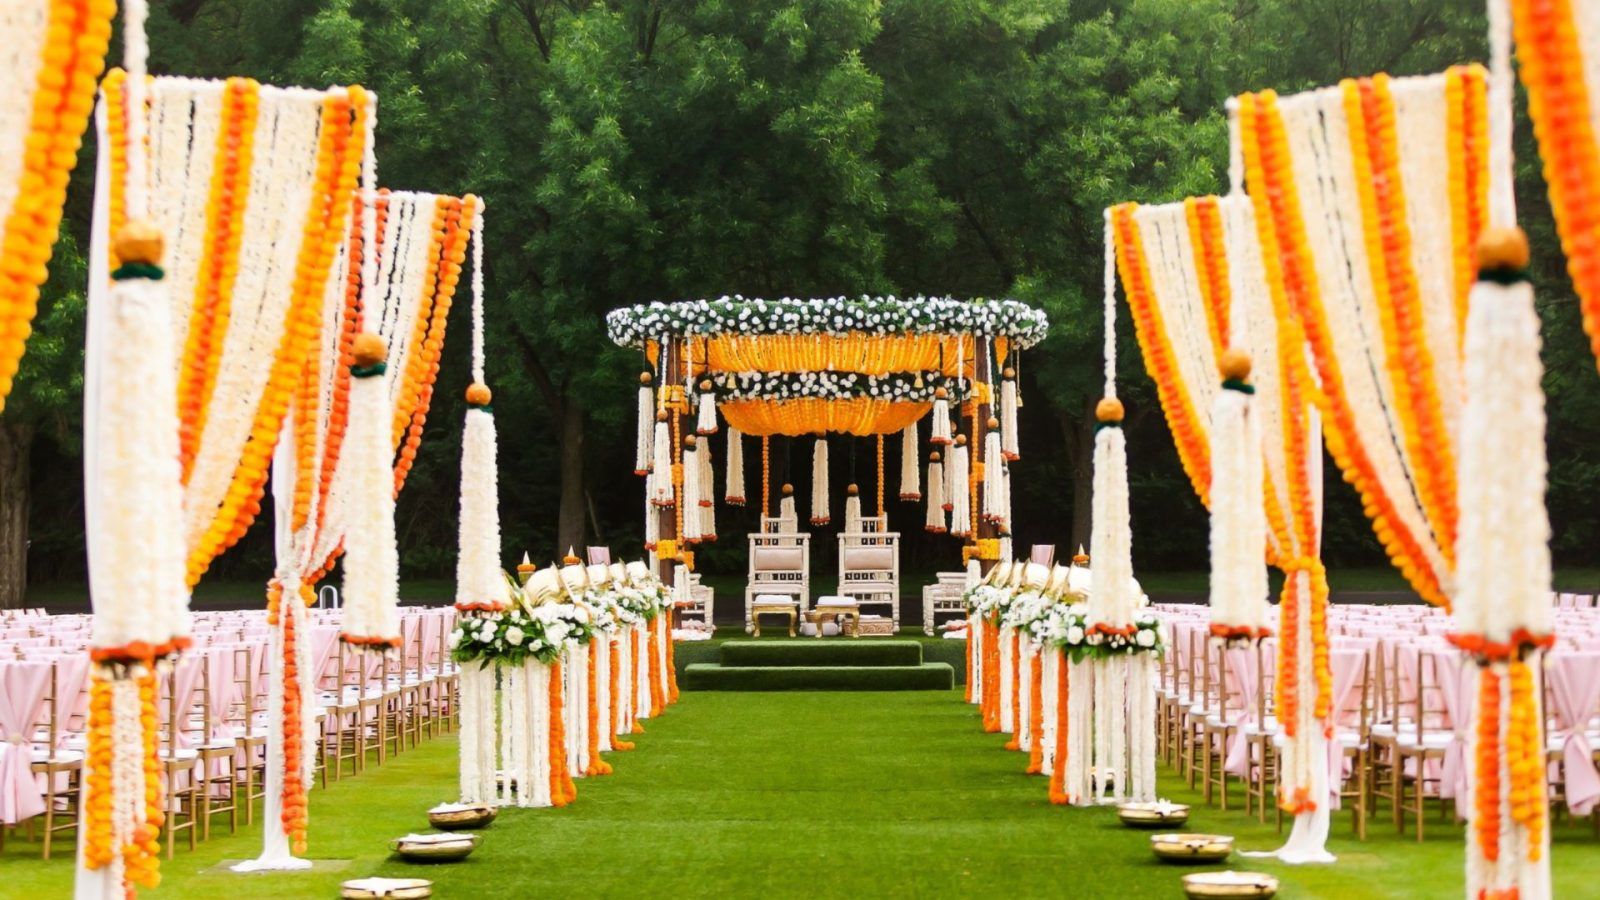 Best Marriage Gardens for Party in Faridabad - Delhi - Delhi ID1541696